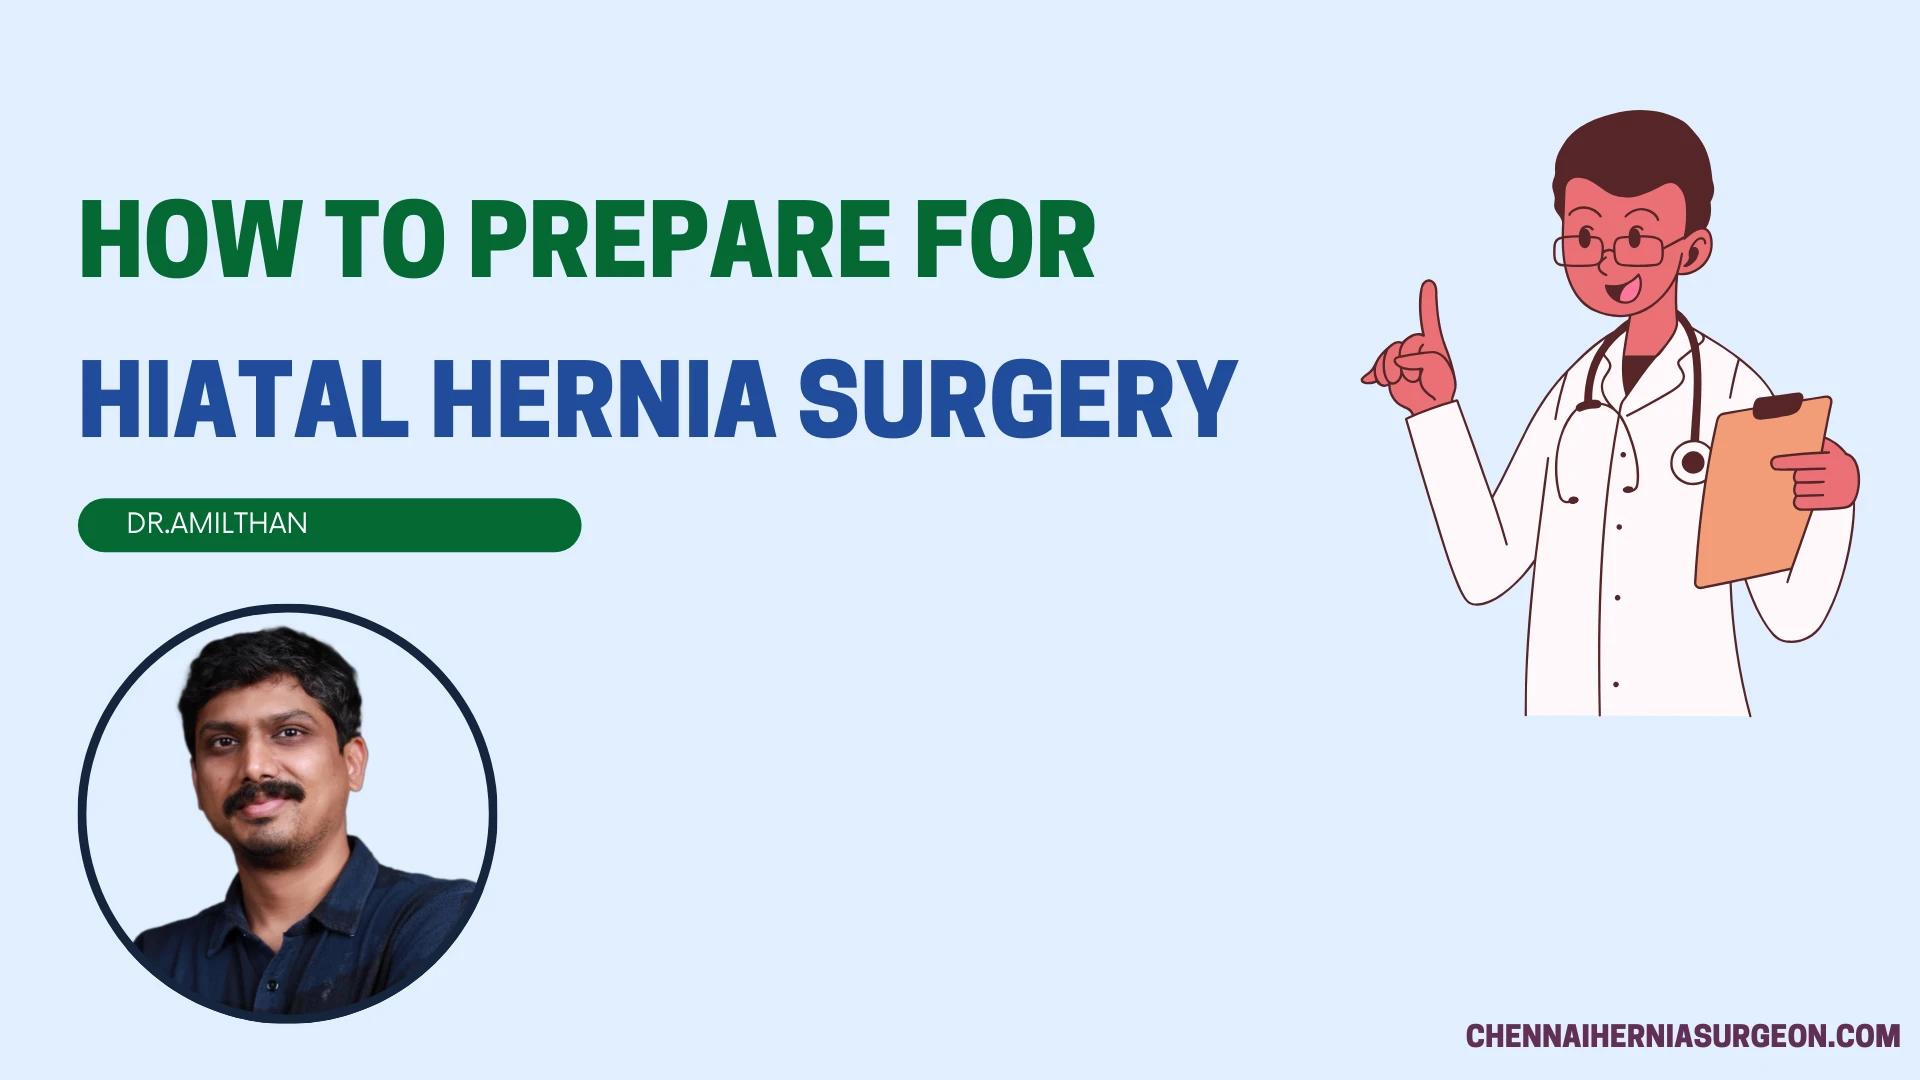 How to Prepare for Hiatal Hernia Surgery